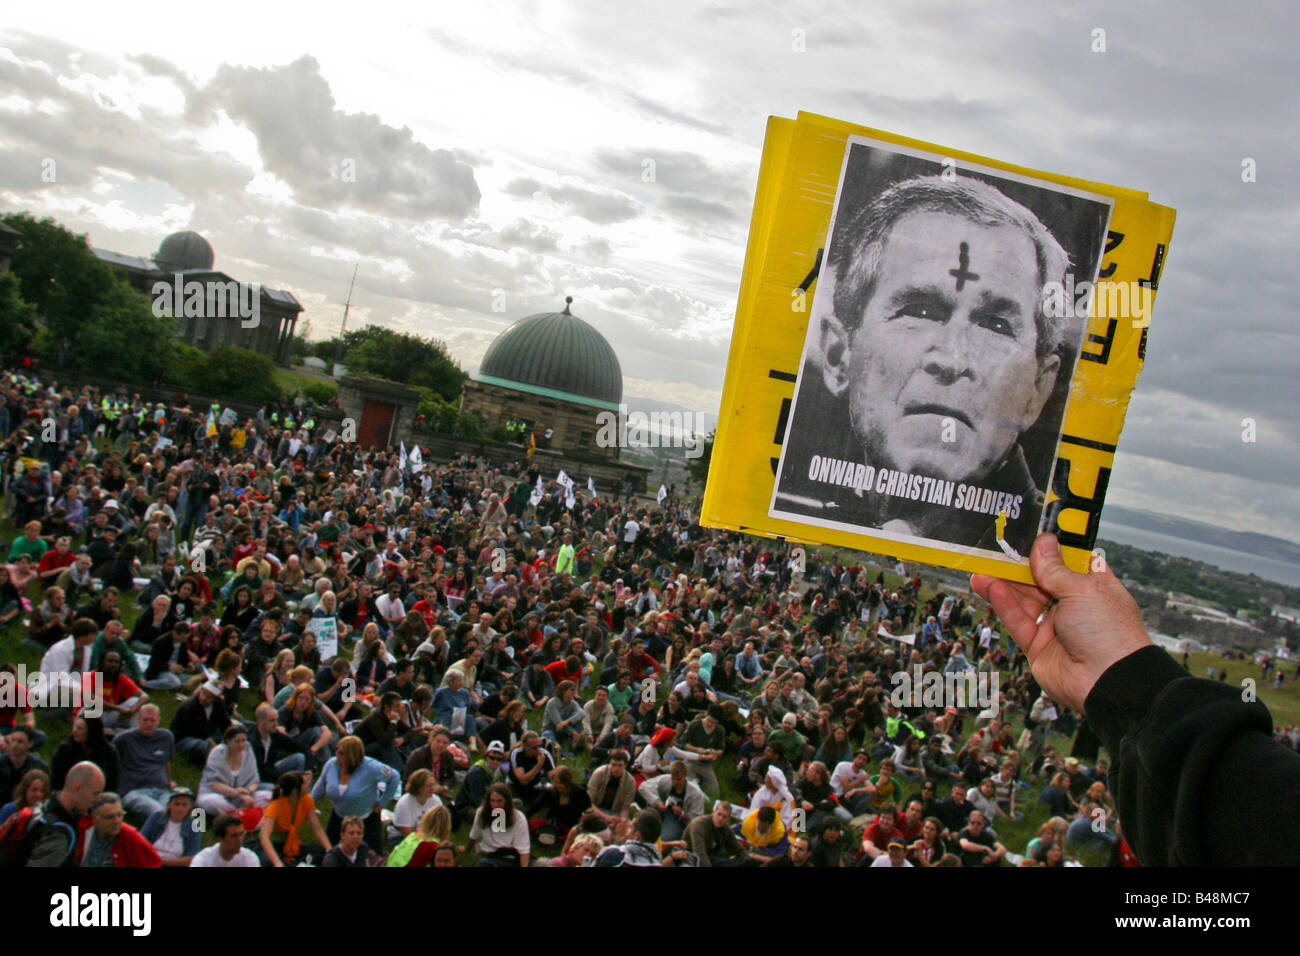 George W. Bush image during anti G8 protest in Edinburgh, Scotland UK Stock Photo